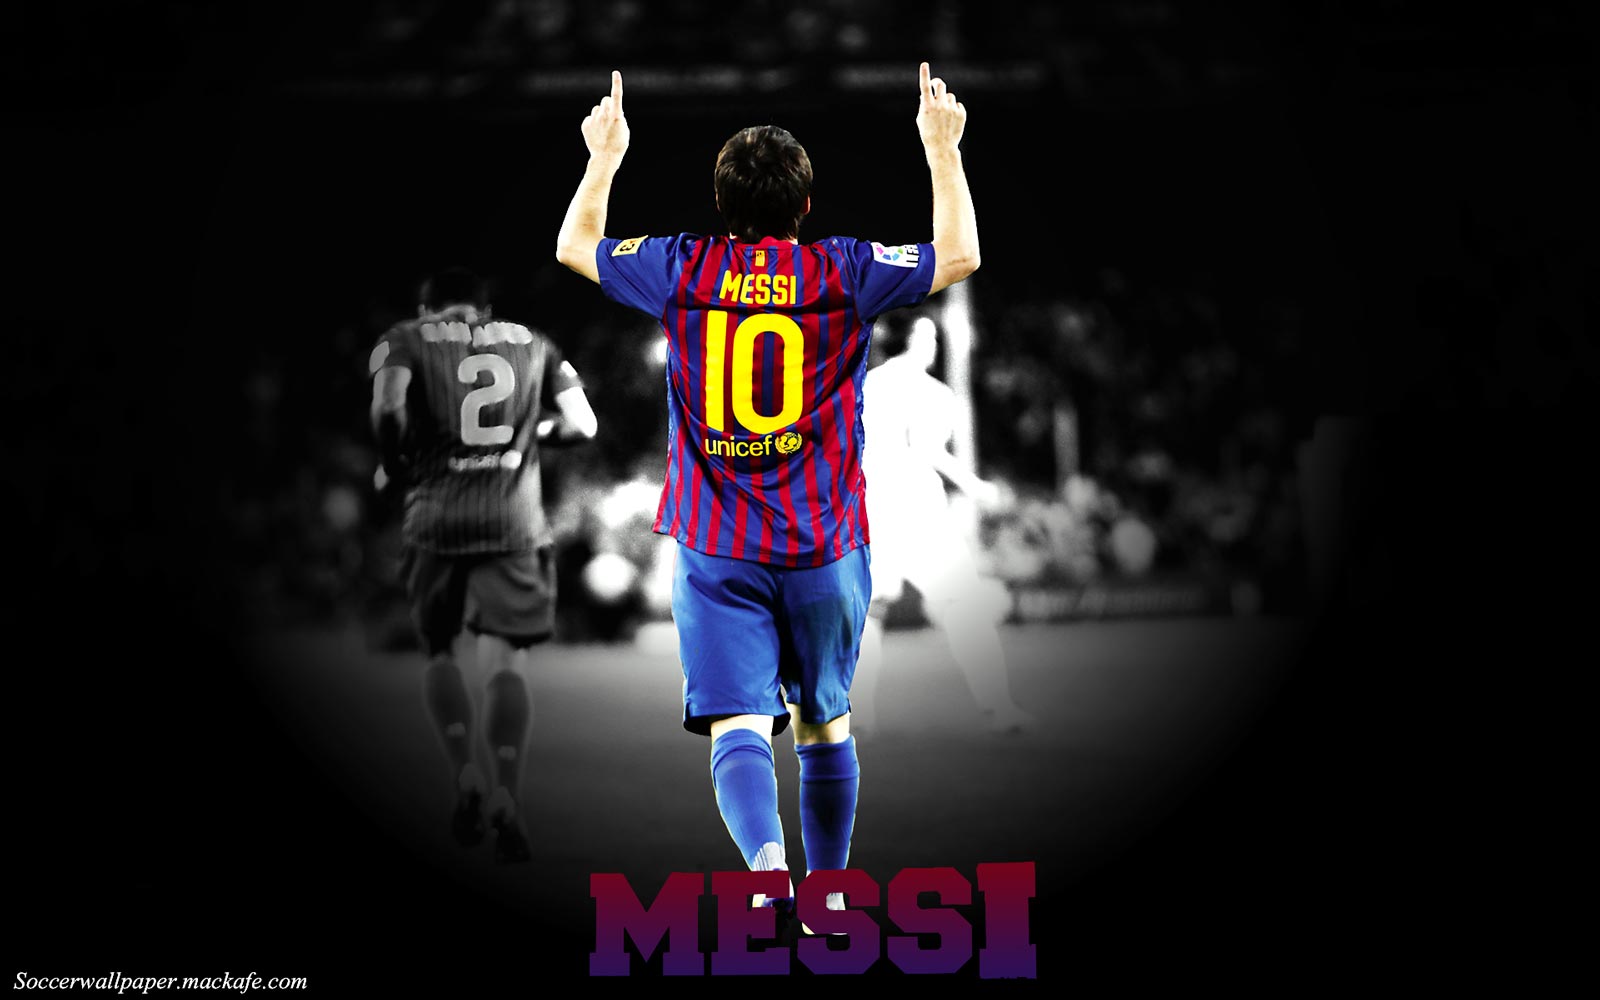 Soccer Wallpaper Messi Best Player